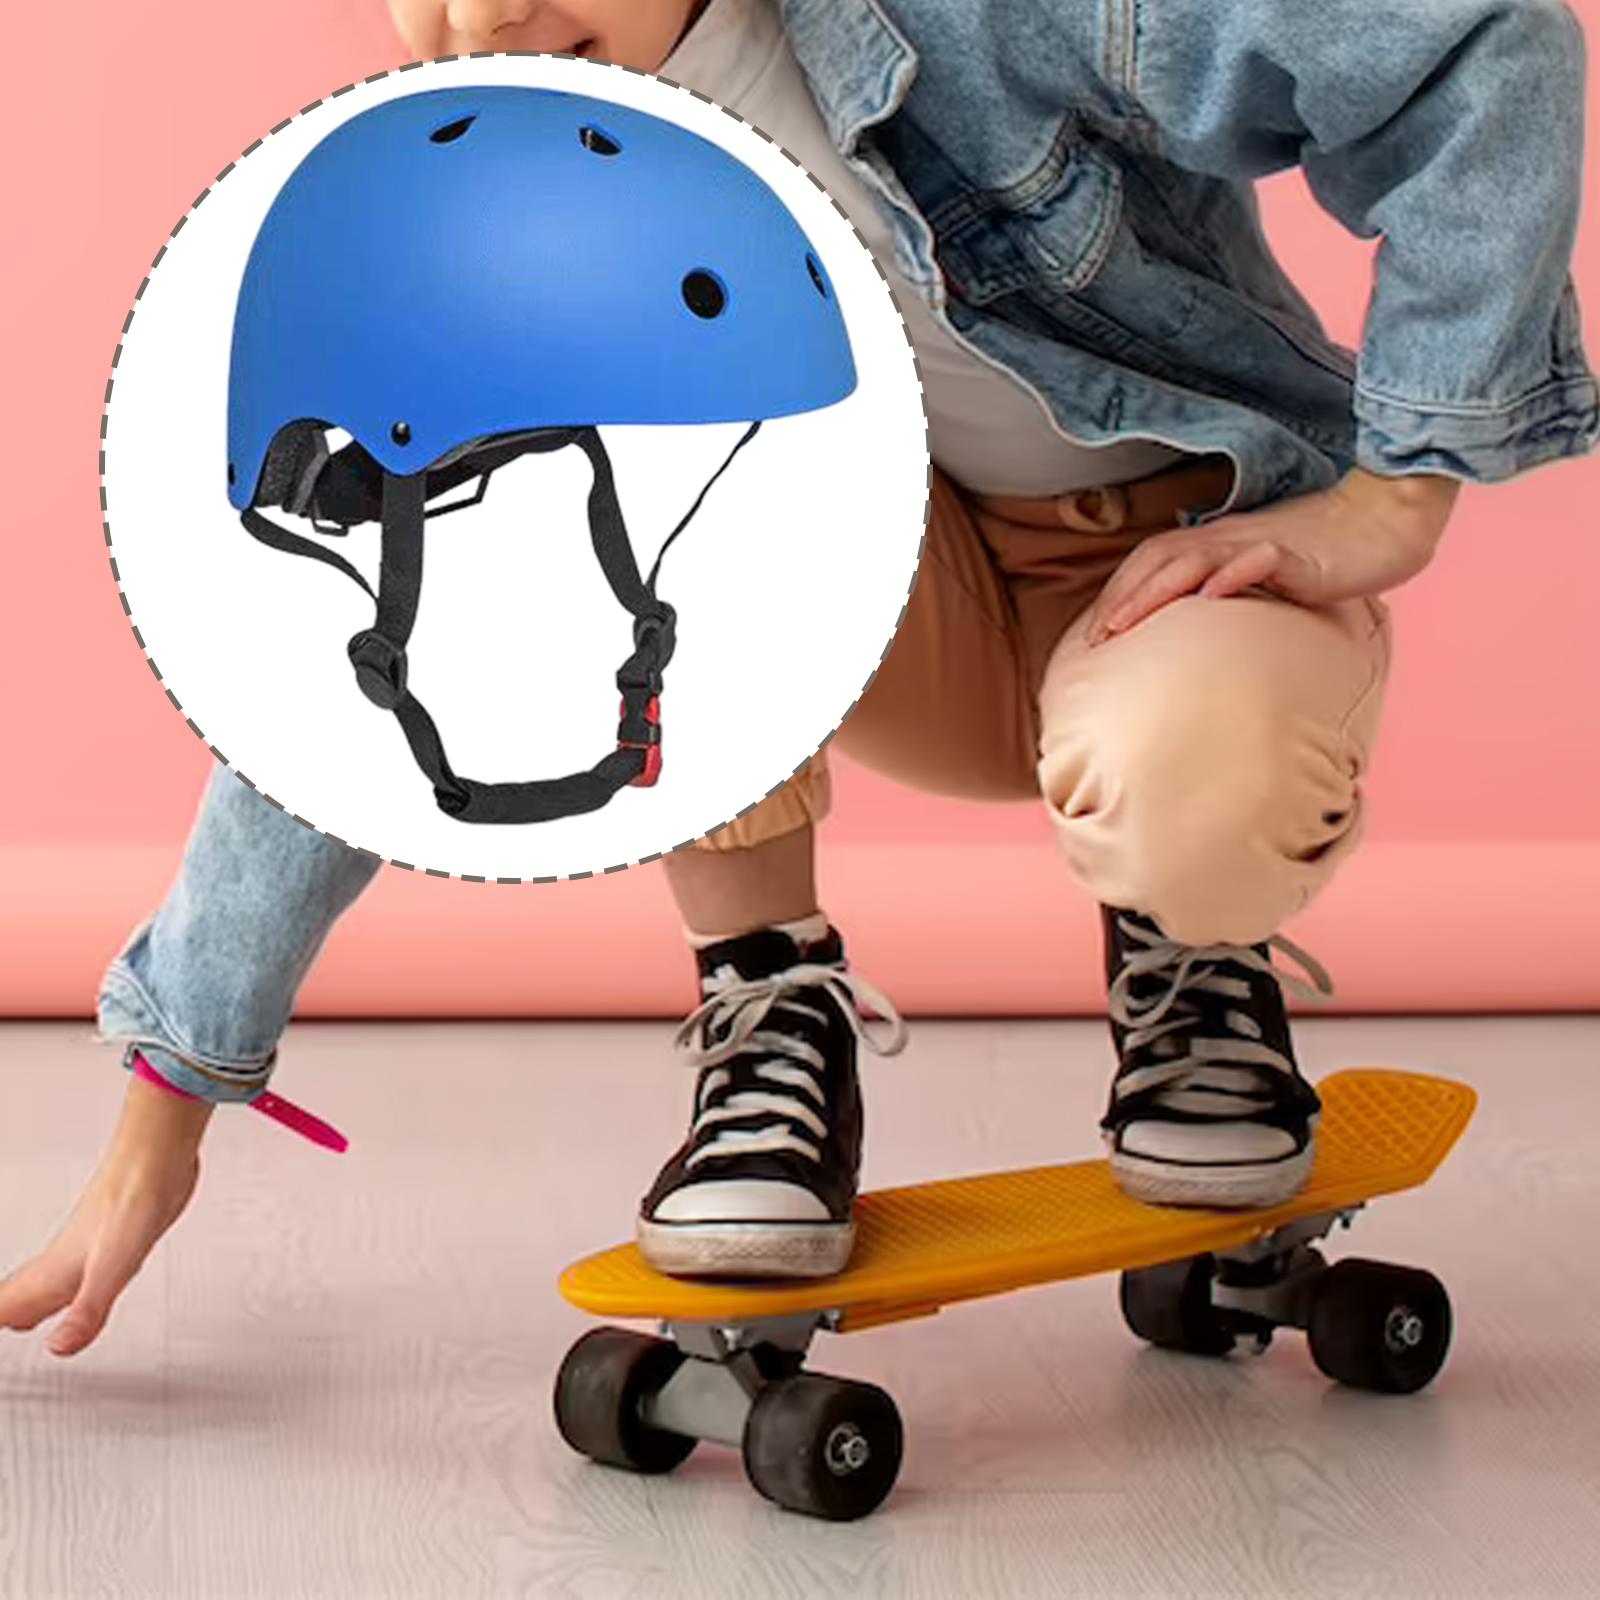 Kids Skateboard Helmet Bicycle Safety Helmet for Roller Skate Skating Skiing Blue